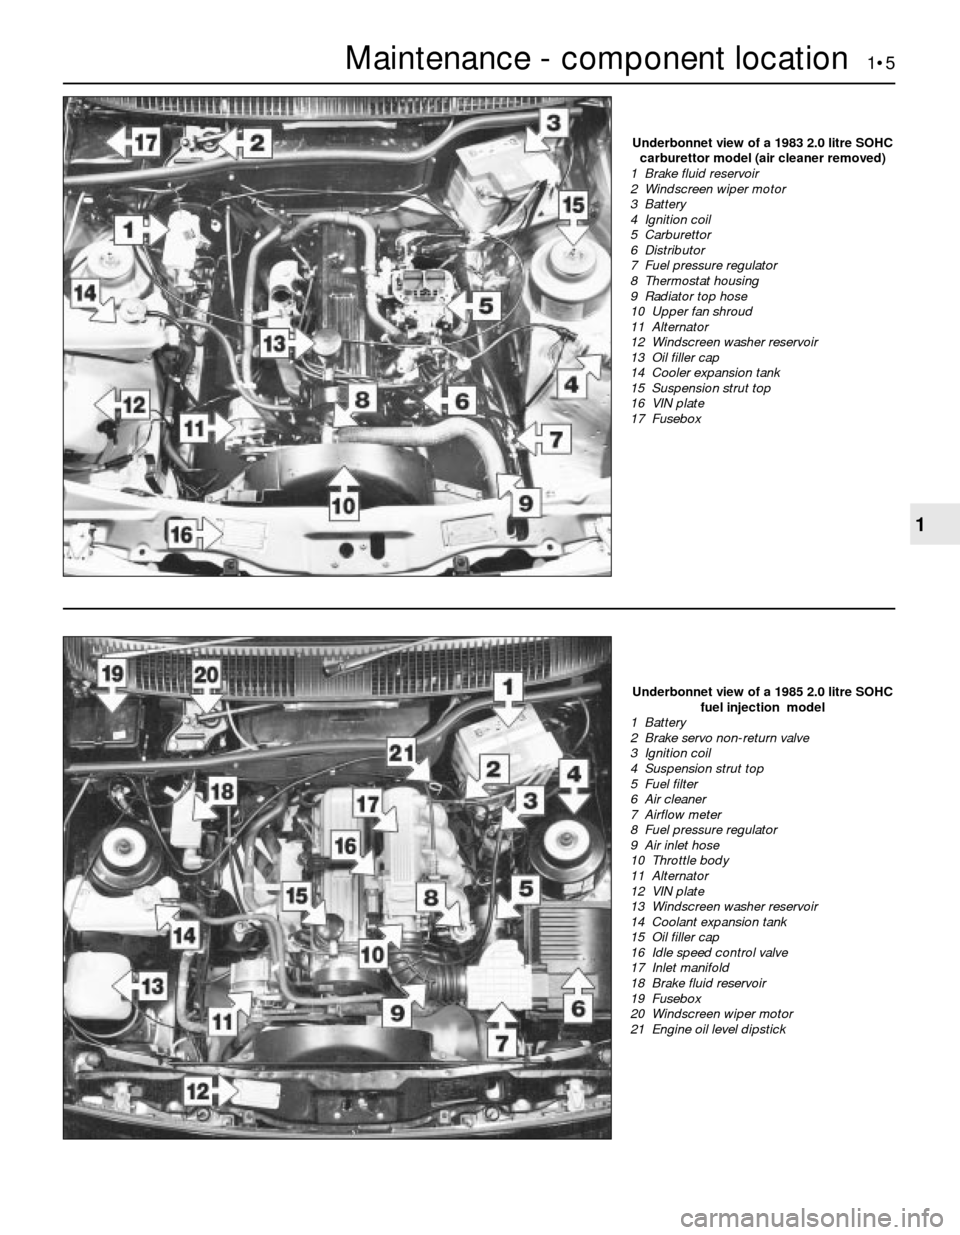 FORD SIERRA 1983 1.G Routine Manintenance And Servicing Workshop Manual Maintenance - component location  1•5
1
Underbonnet view of a 1985 2.0 litre SOHC
fuel injection  model
1  Battery
2  Brake servo non-return valve
3  Ignition coil
4  Suspension strut top
5  Fuel fi